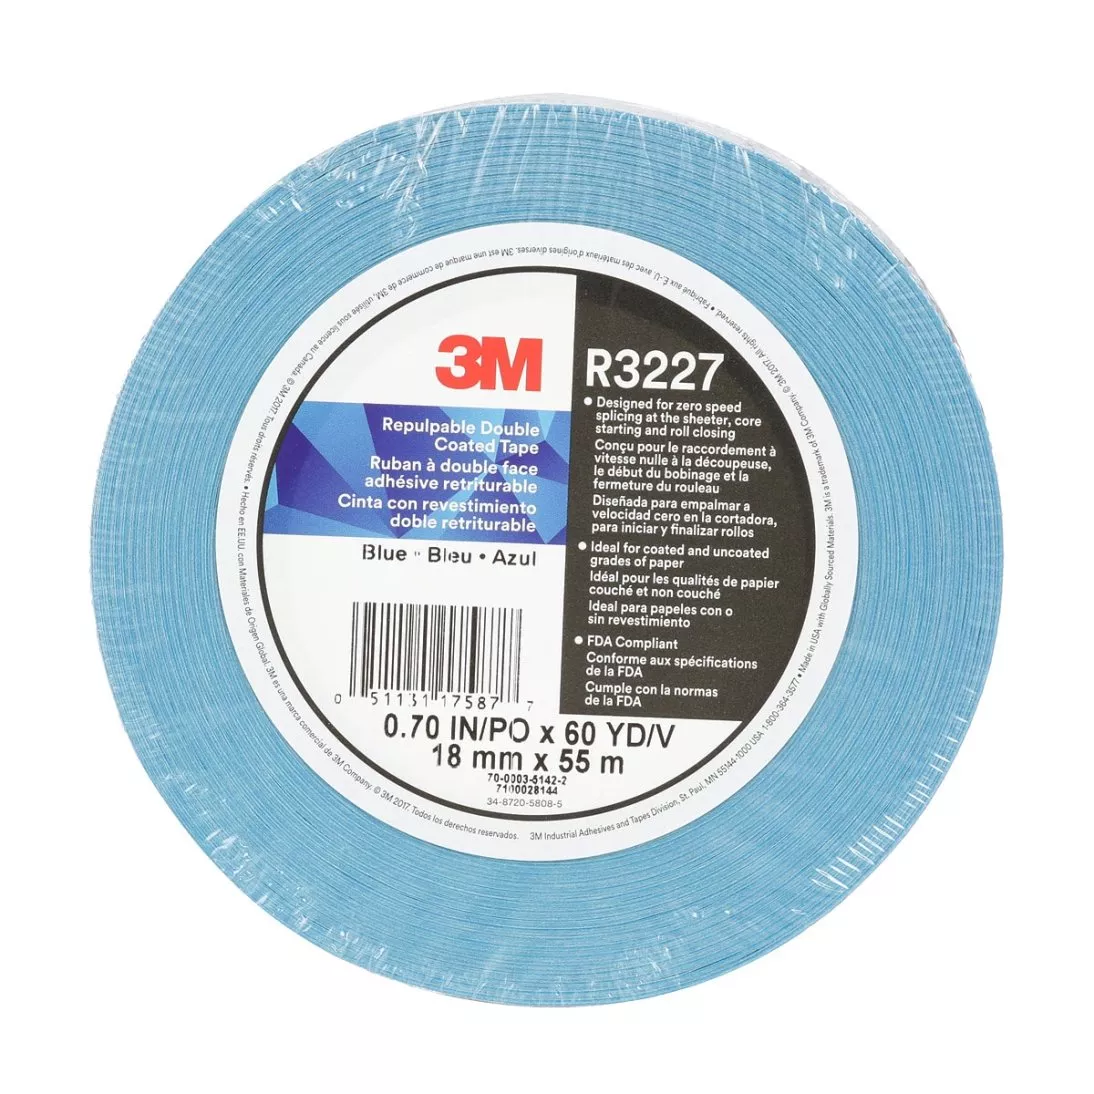 3M™ Repulpable Double Coated Tape R3227, Blue, 18 mm x 55 m, 3.5 mil, 48
rolls per case